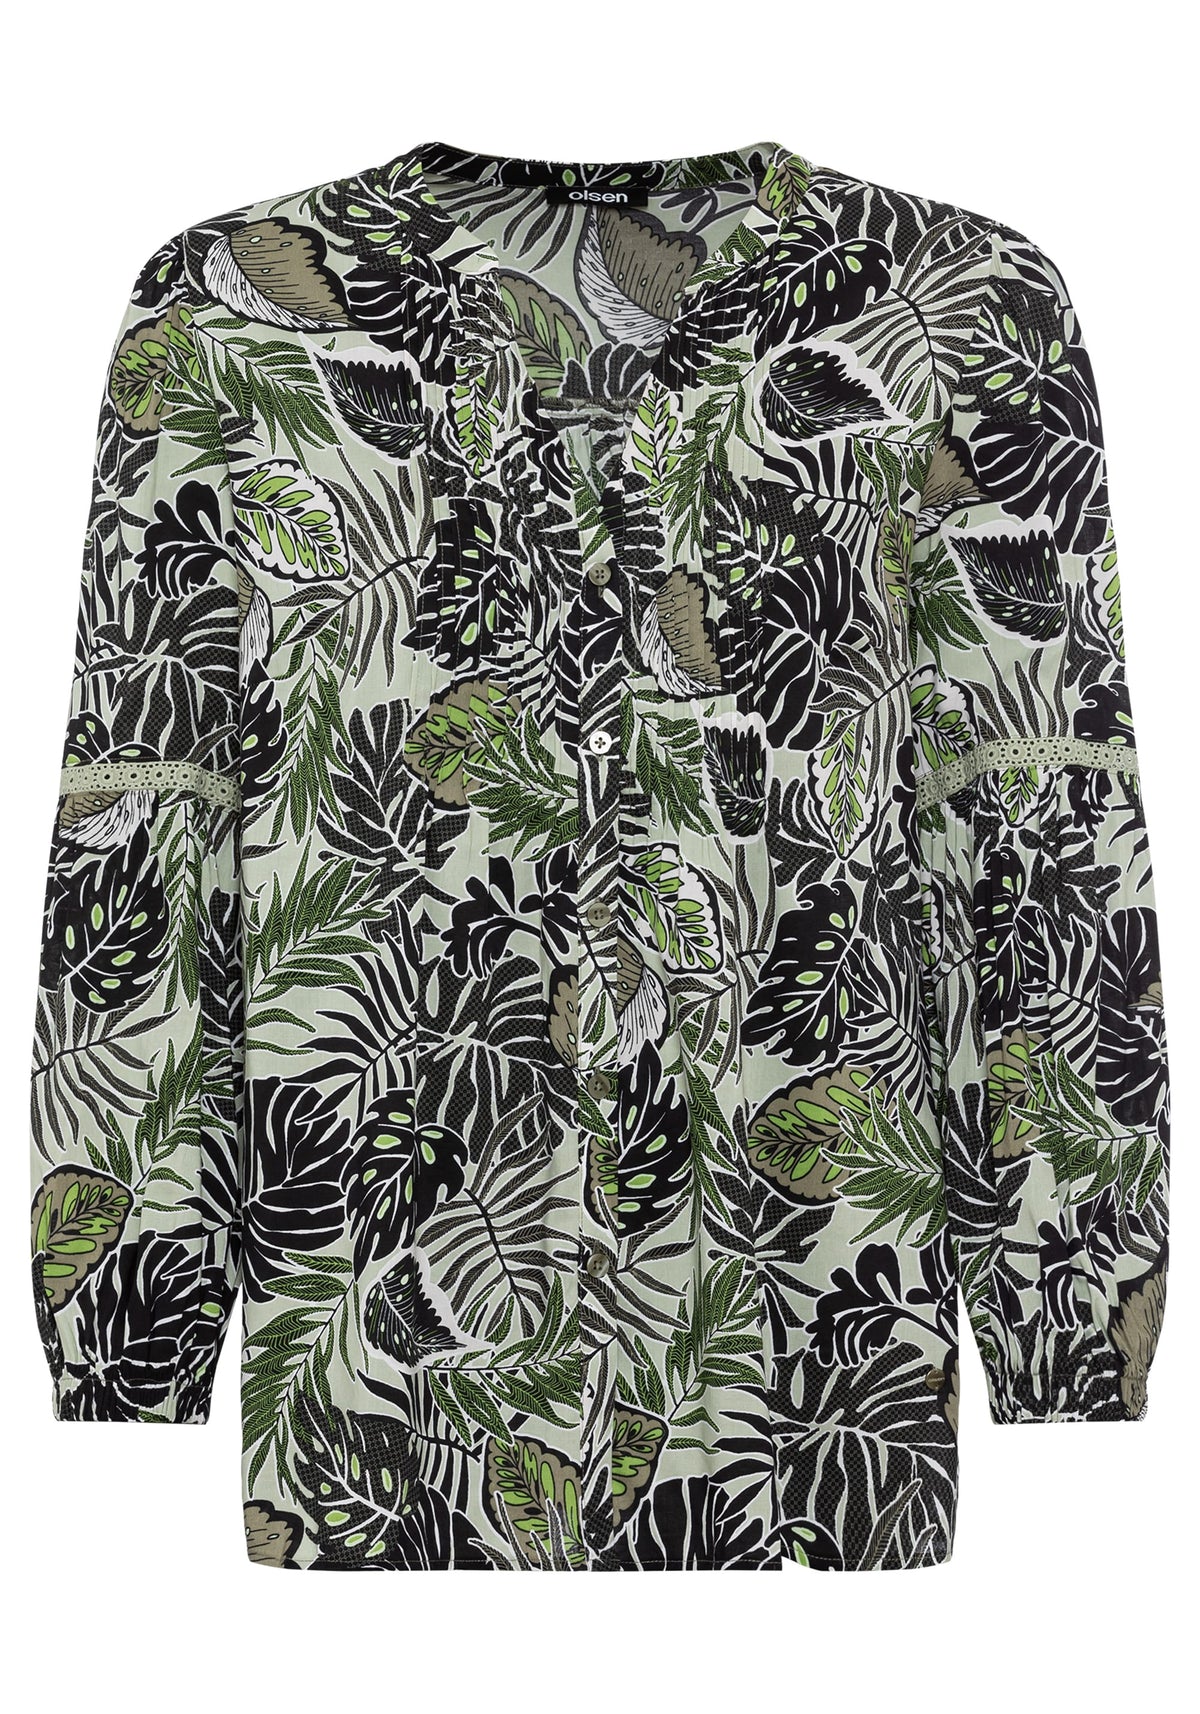 Cotton Viscose Leaf Print Tunic Shirt